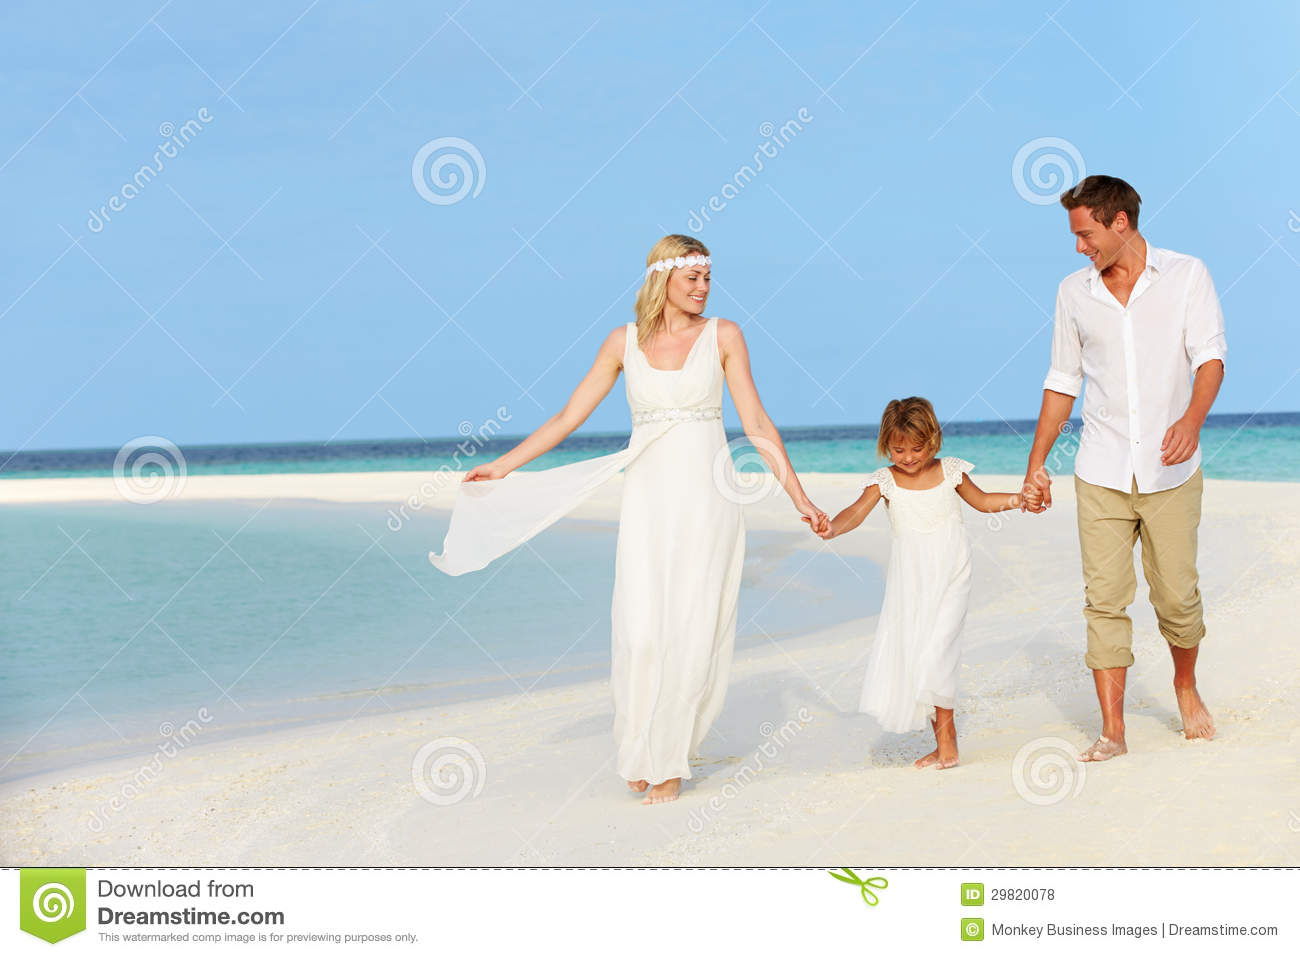 Beautiful Wedding at Beach